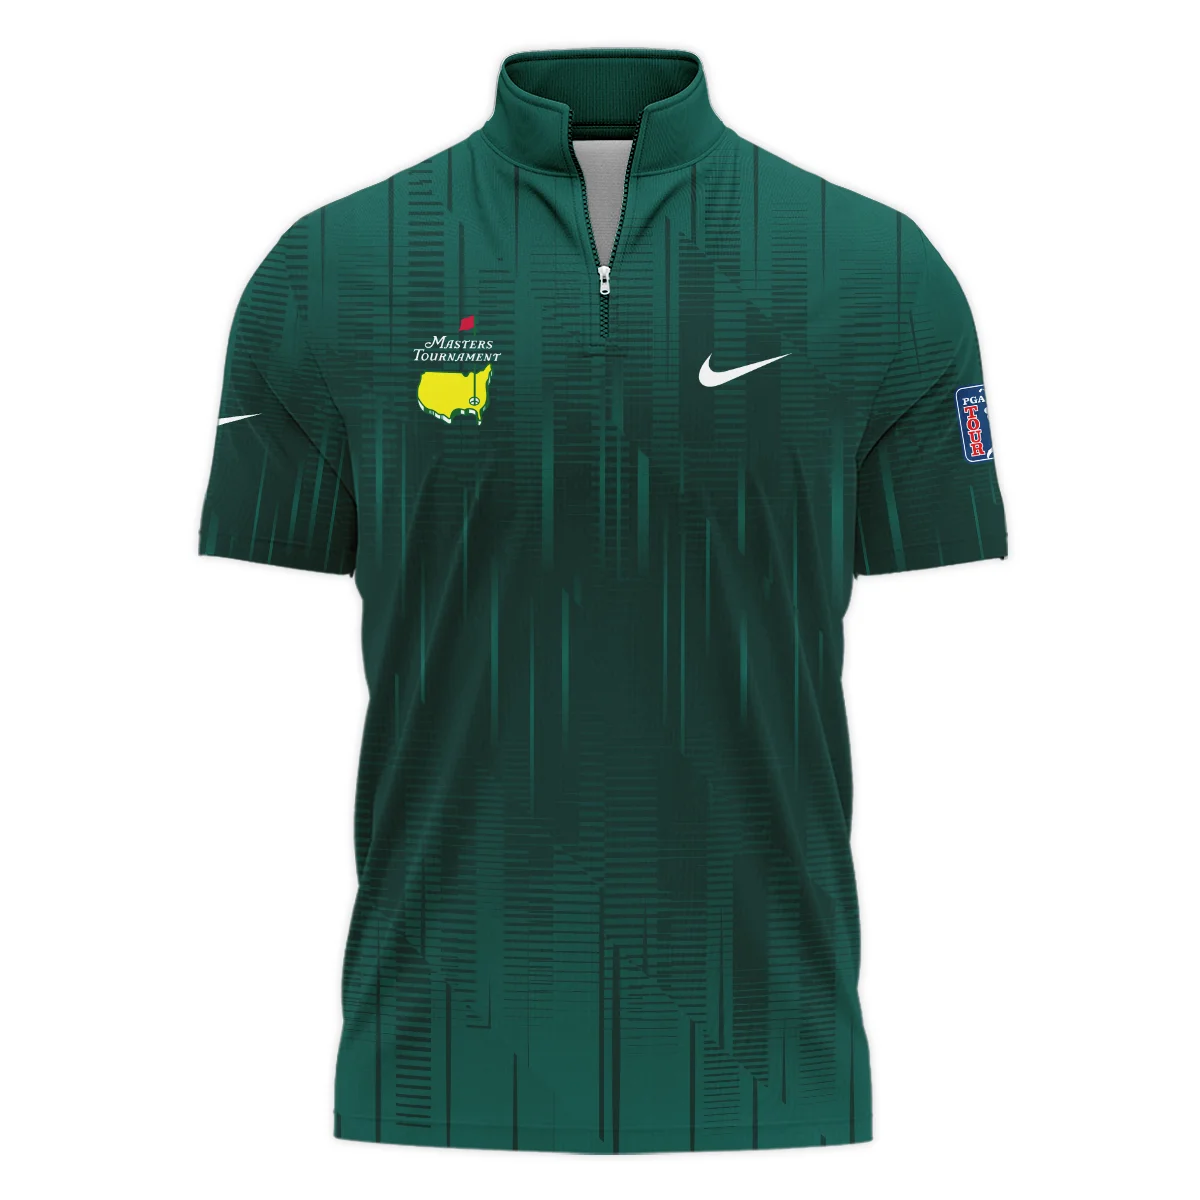 Masters Tournament Nike Dark Green Gradient Stripes Pattern Sleeveless Jacket Style Classic Sleeveless Jacket